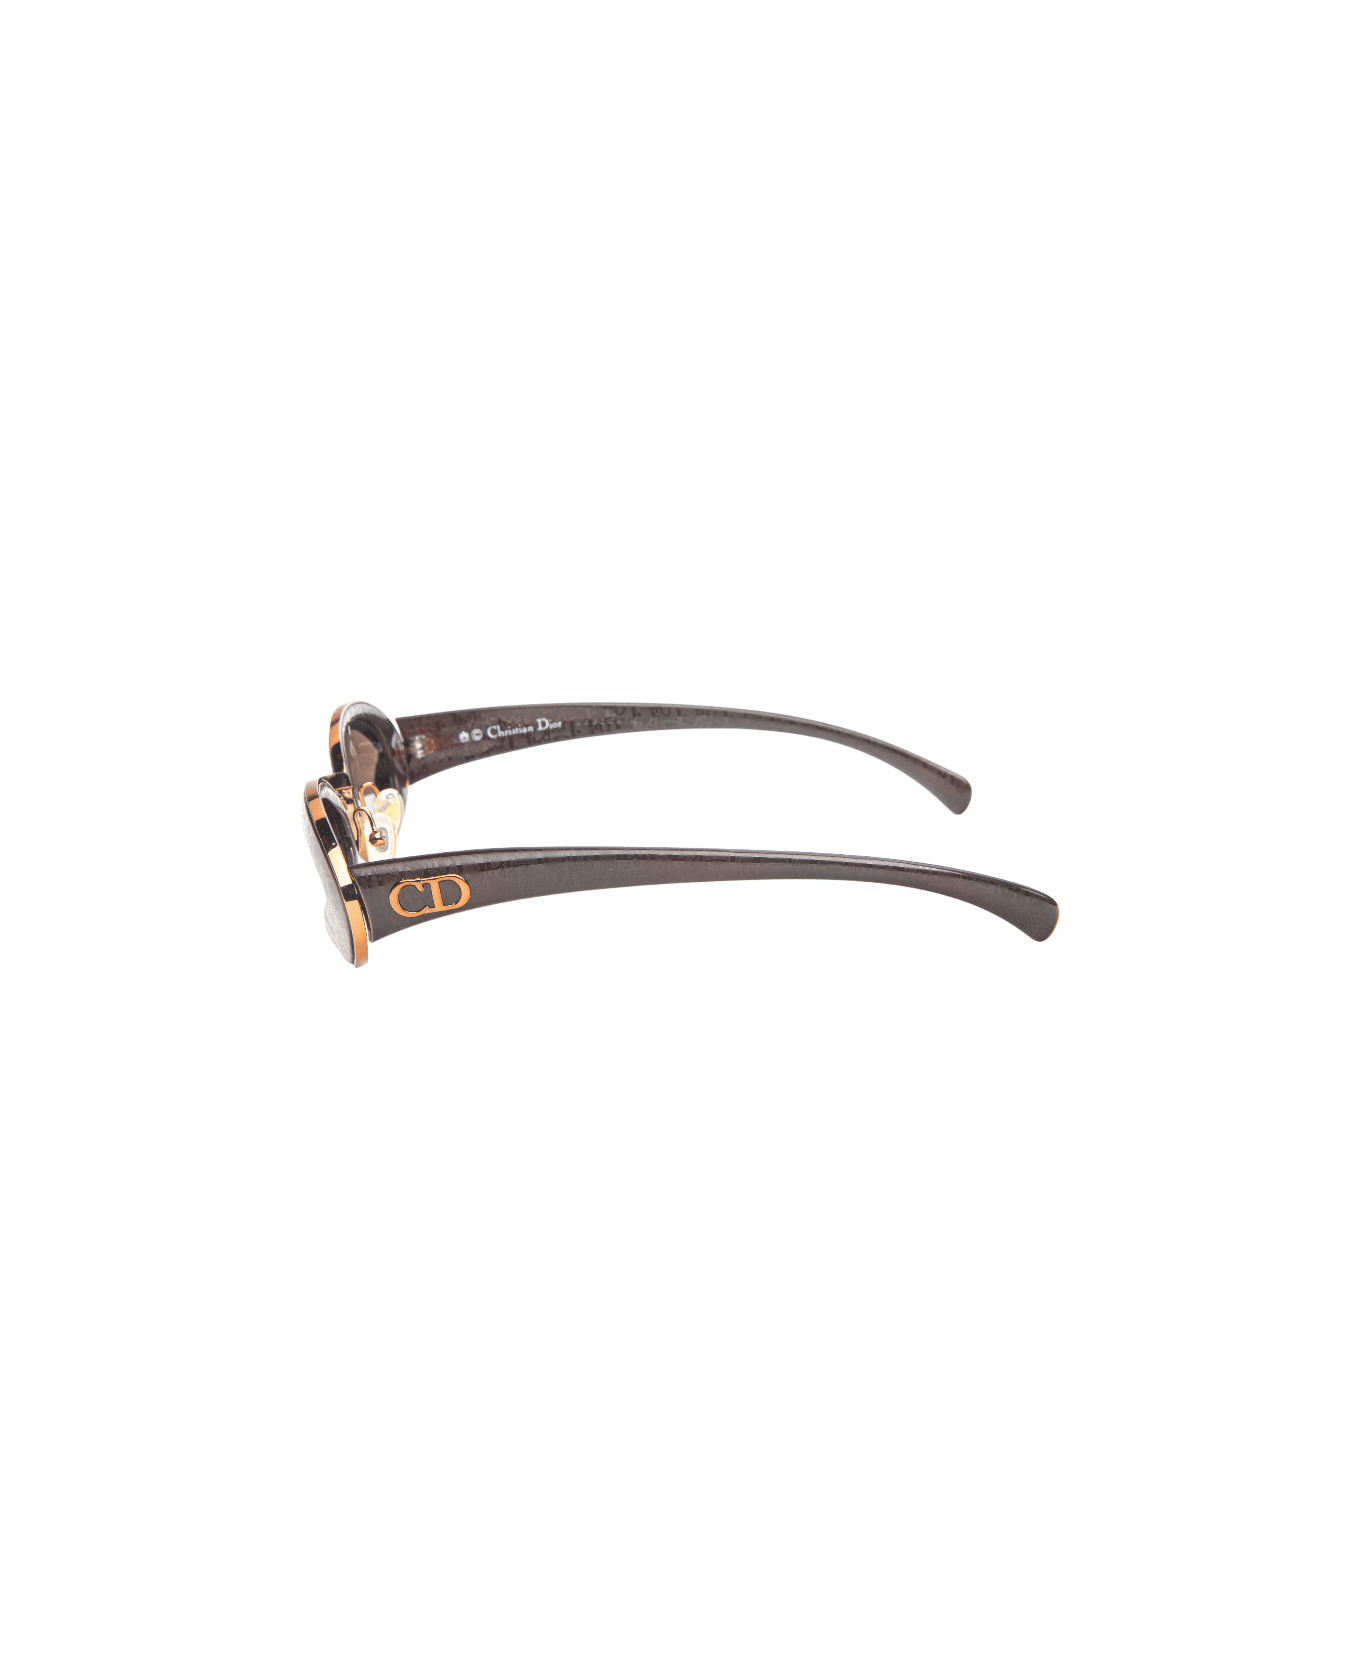 Dior Eyewear Pin Up - Limited Edition - Dark Brown Sunglasses